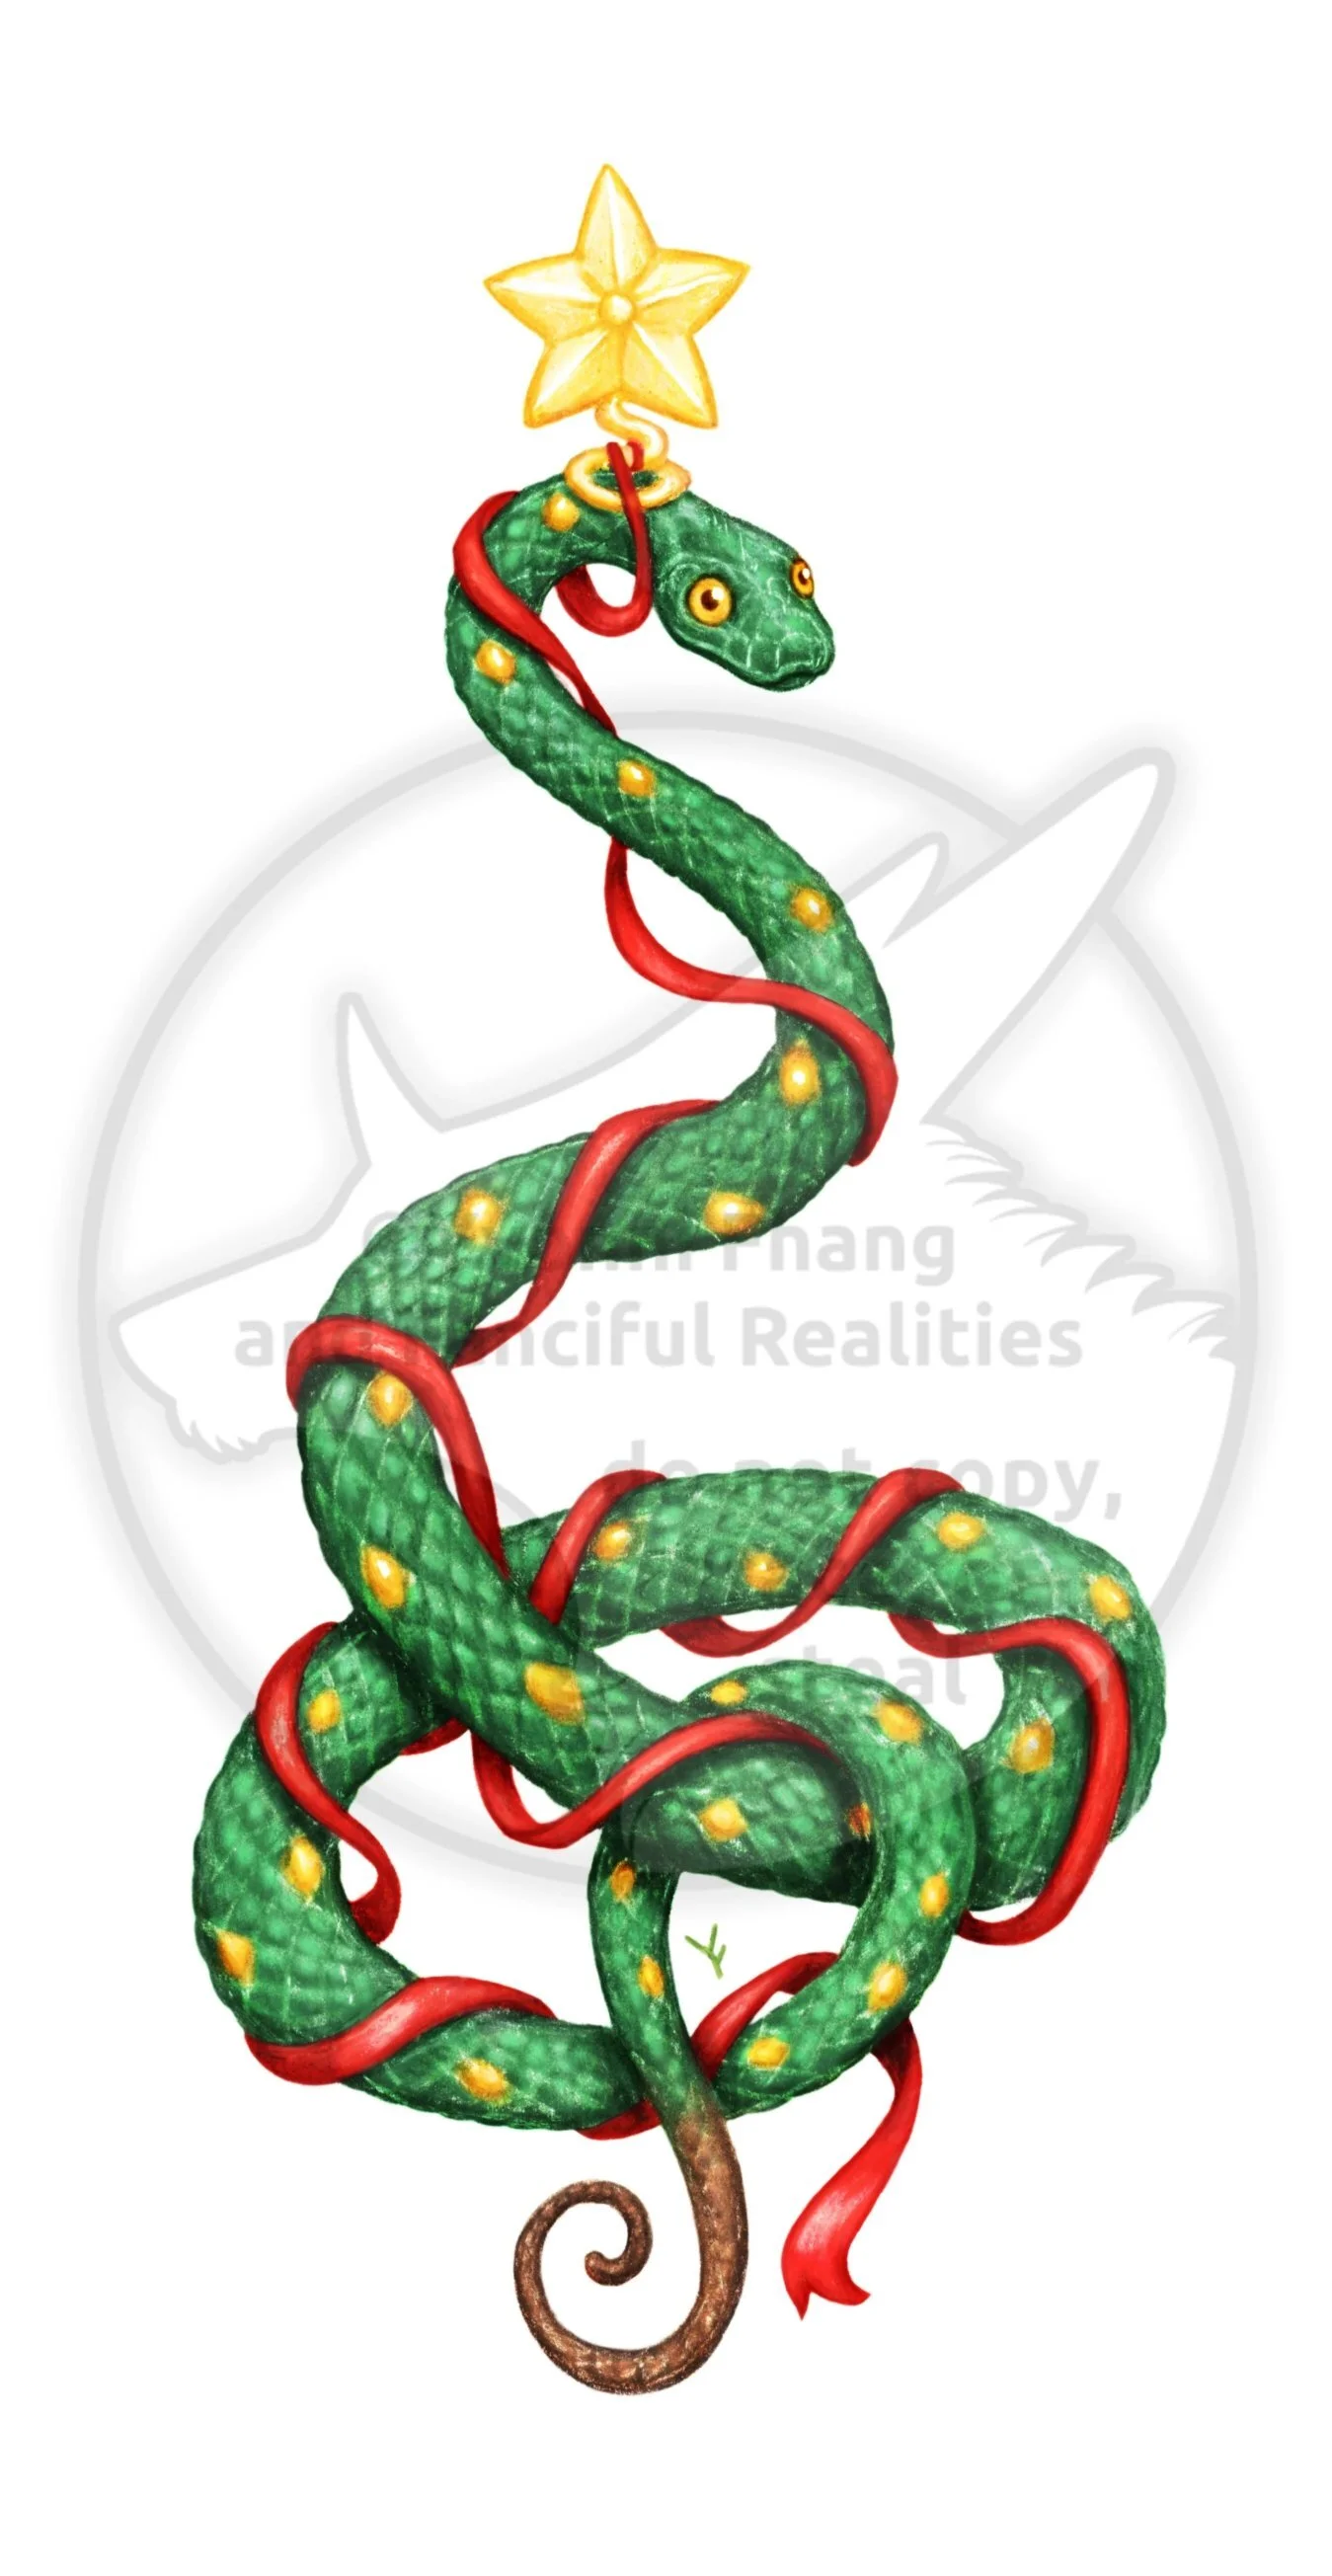 A pretty green snake decorated like a festive Christmas Tree.